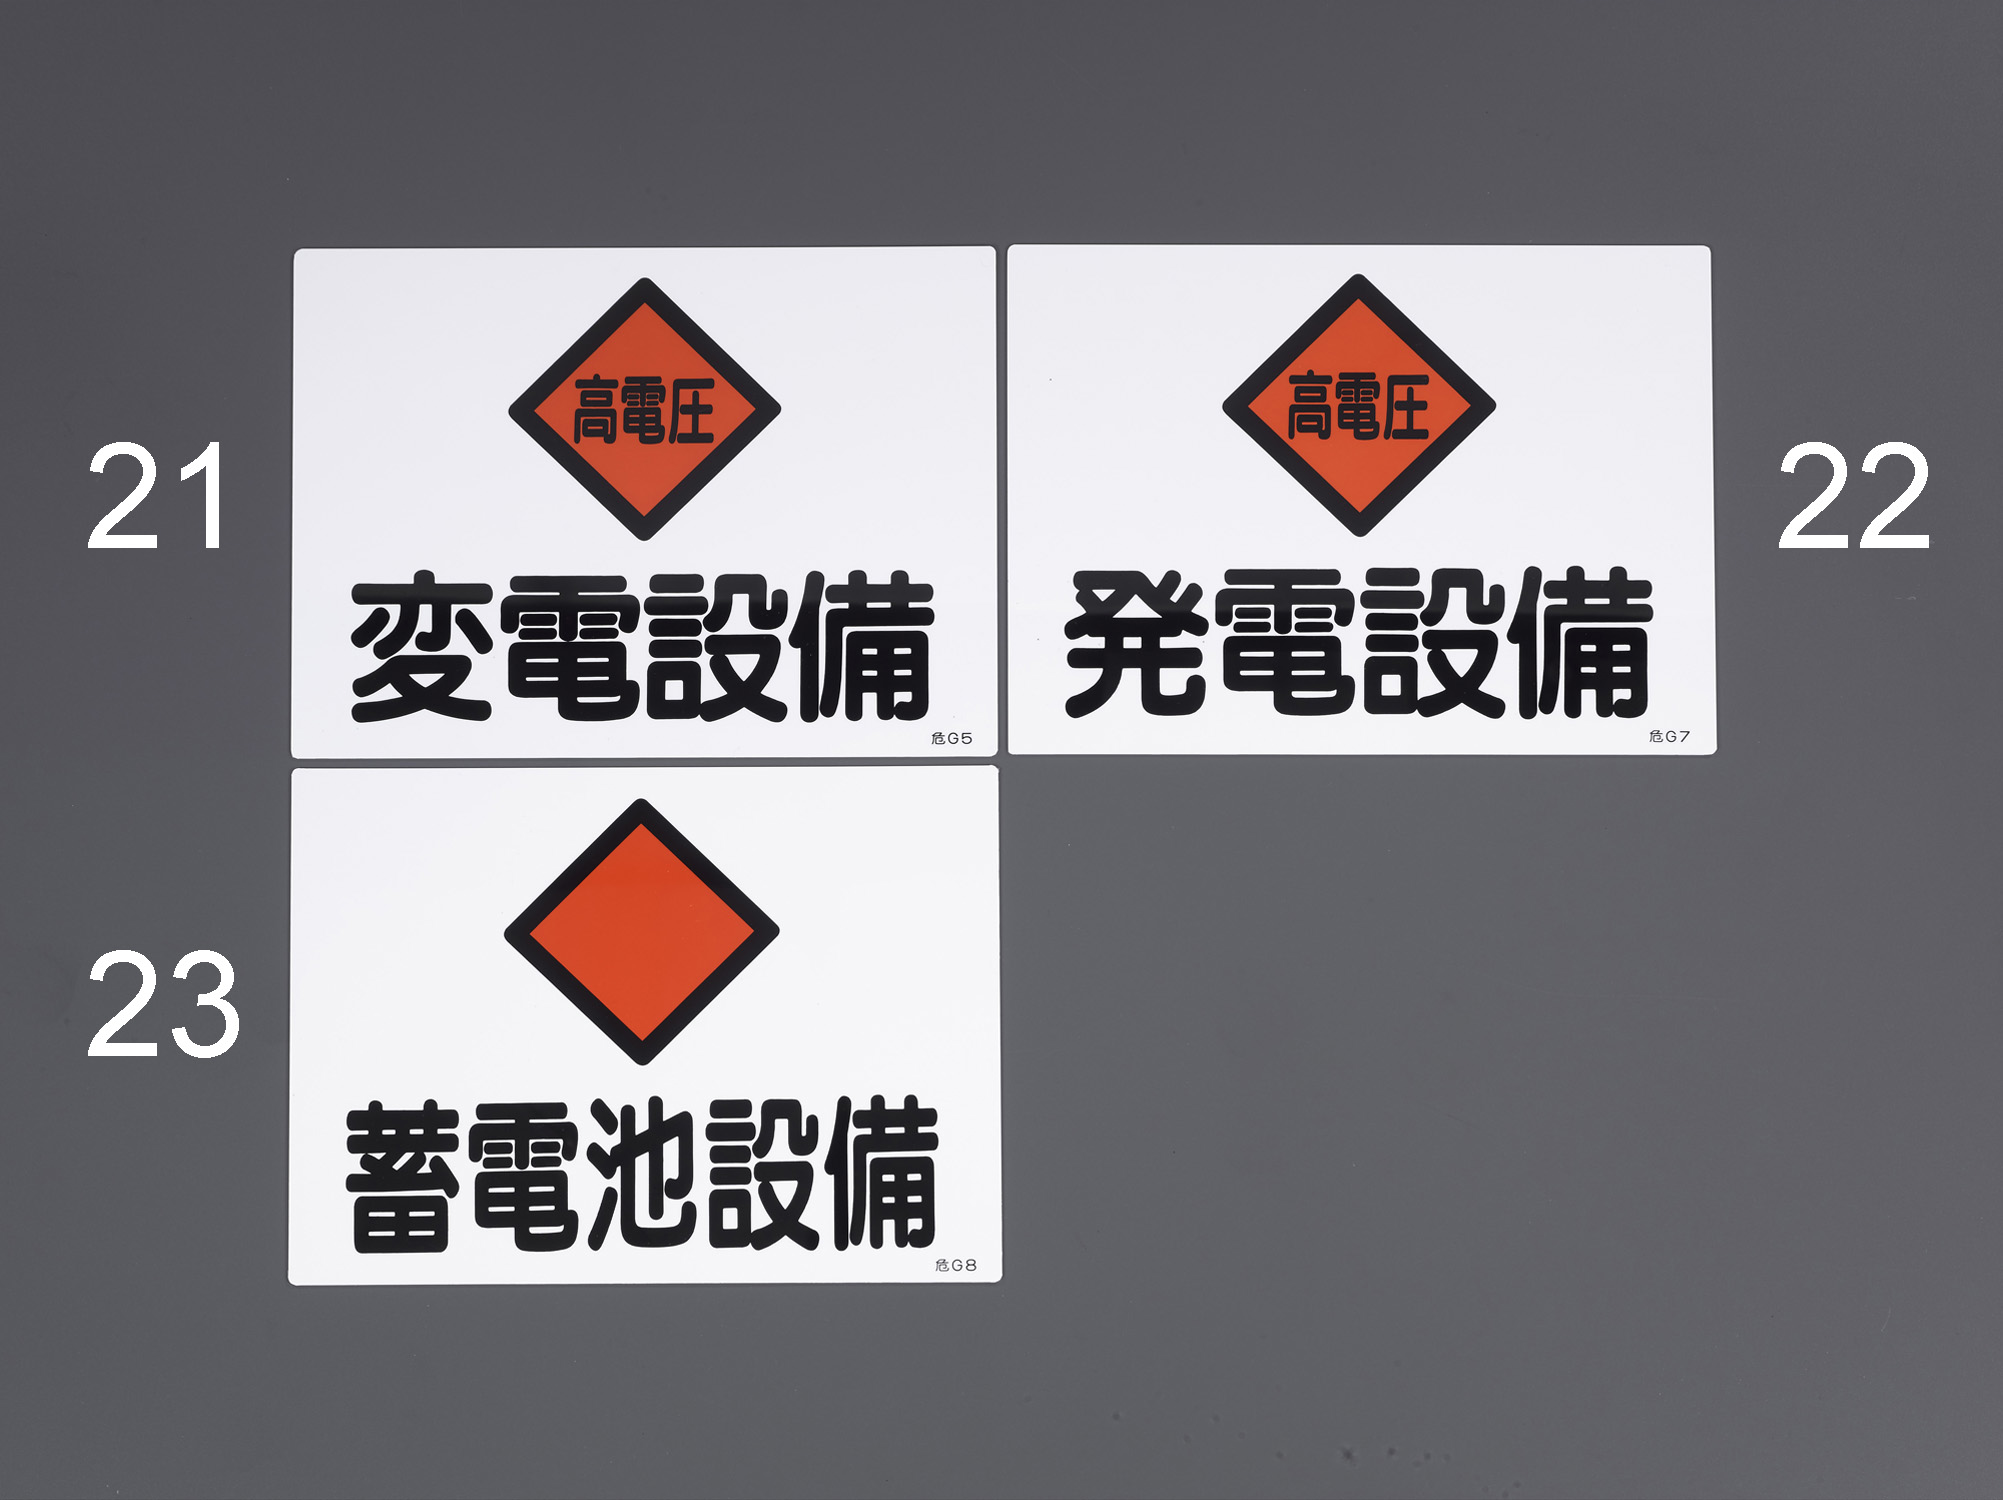 名入れ無料】 日本緑十字社 危険地域室標識 FS18 変電設備 ヨコ 061180